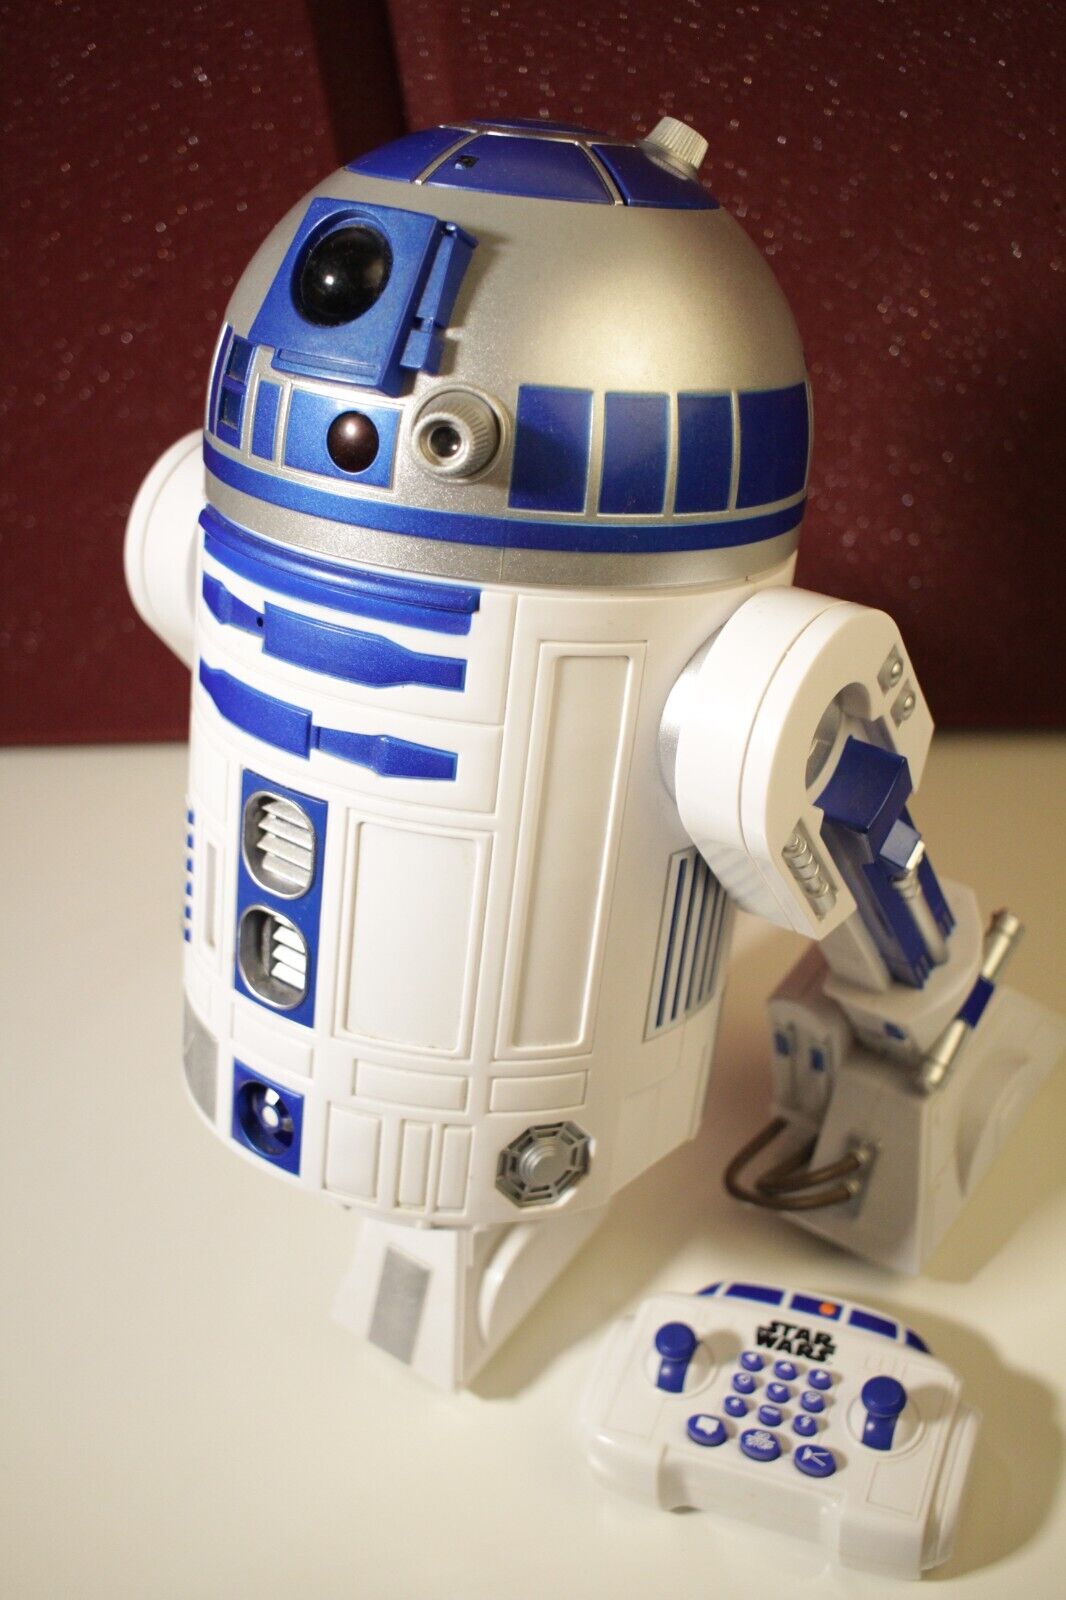 Star Wars Smart R2-D2 Droid RC Robot